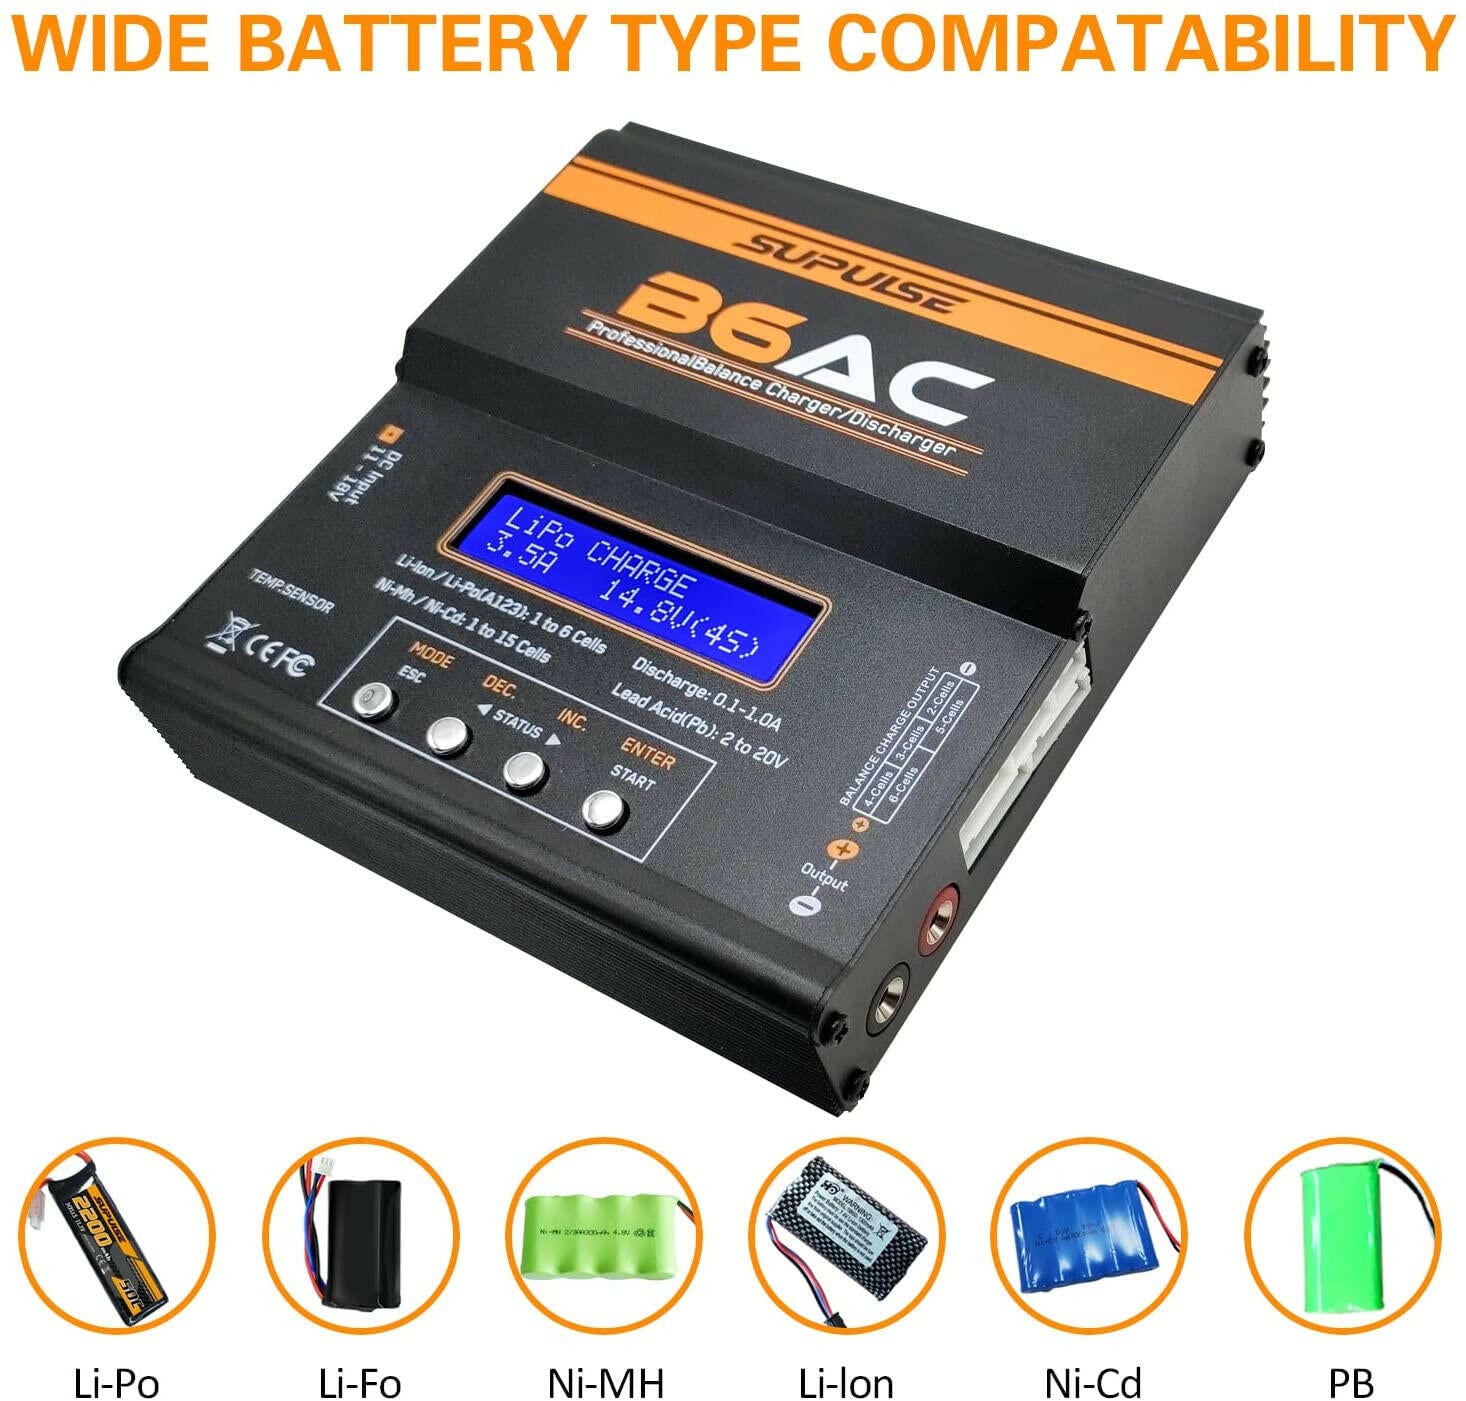 SUPULSE iMAX B6AC 1-6S AC/DC Lipo RC Battery Balance Charger Discharger - EXHOBBY